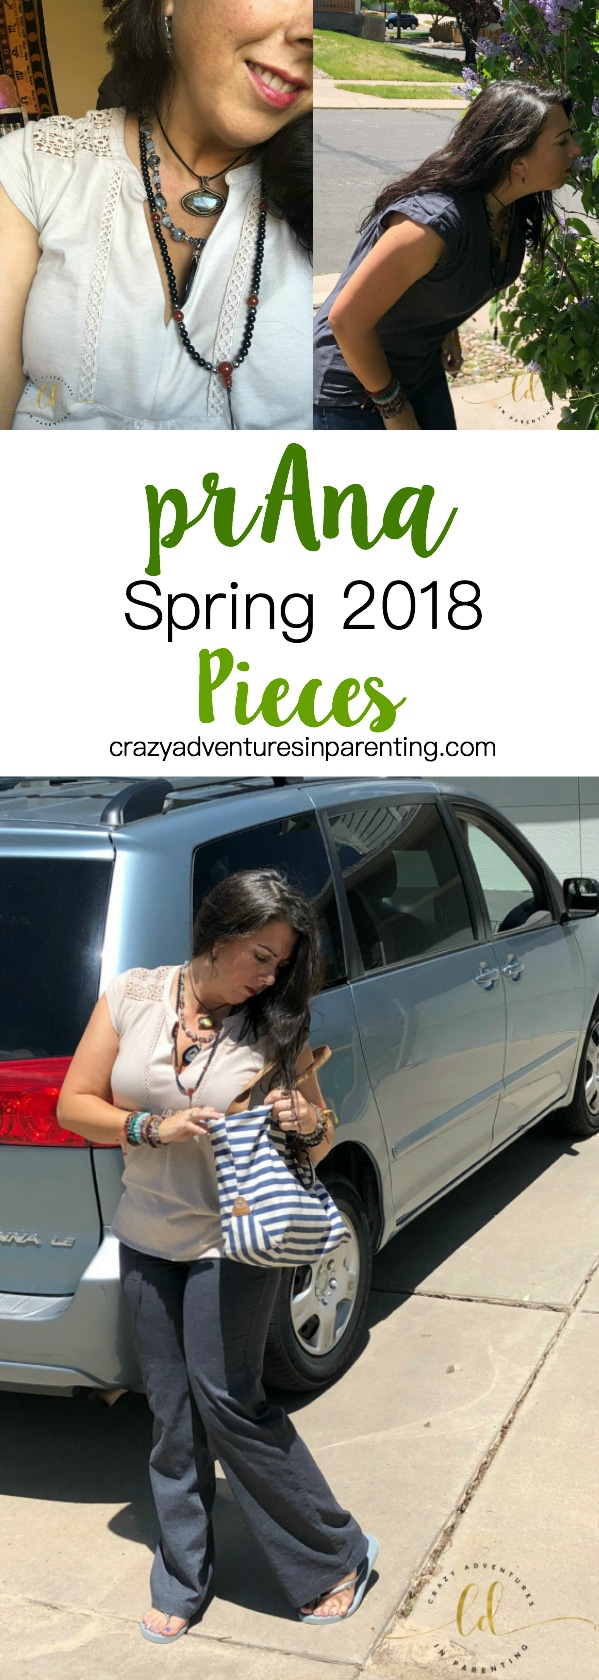 My favorite prAna Spring 2018 Pieces + save 15% with coupon code TRCRS18! #TravelprAna #prAnaSpring18